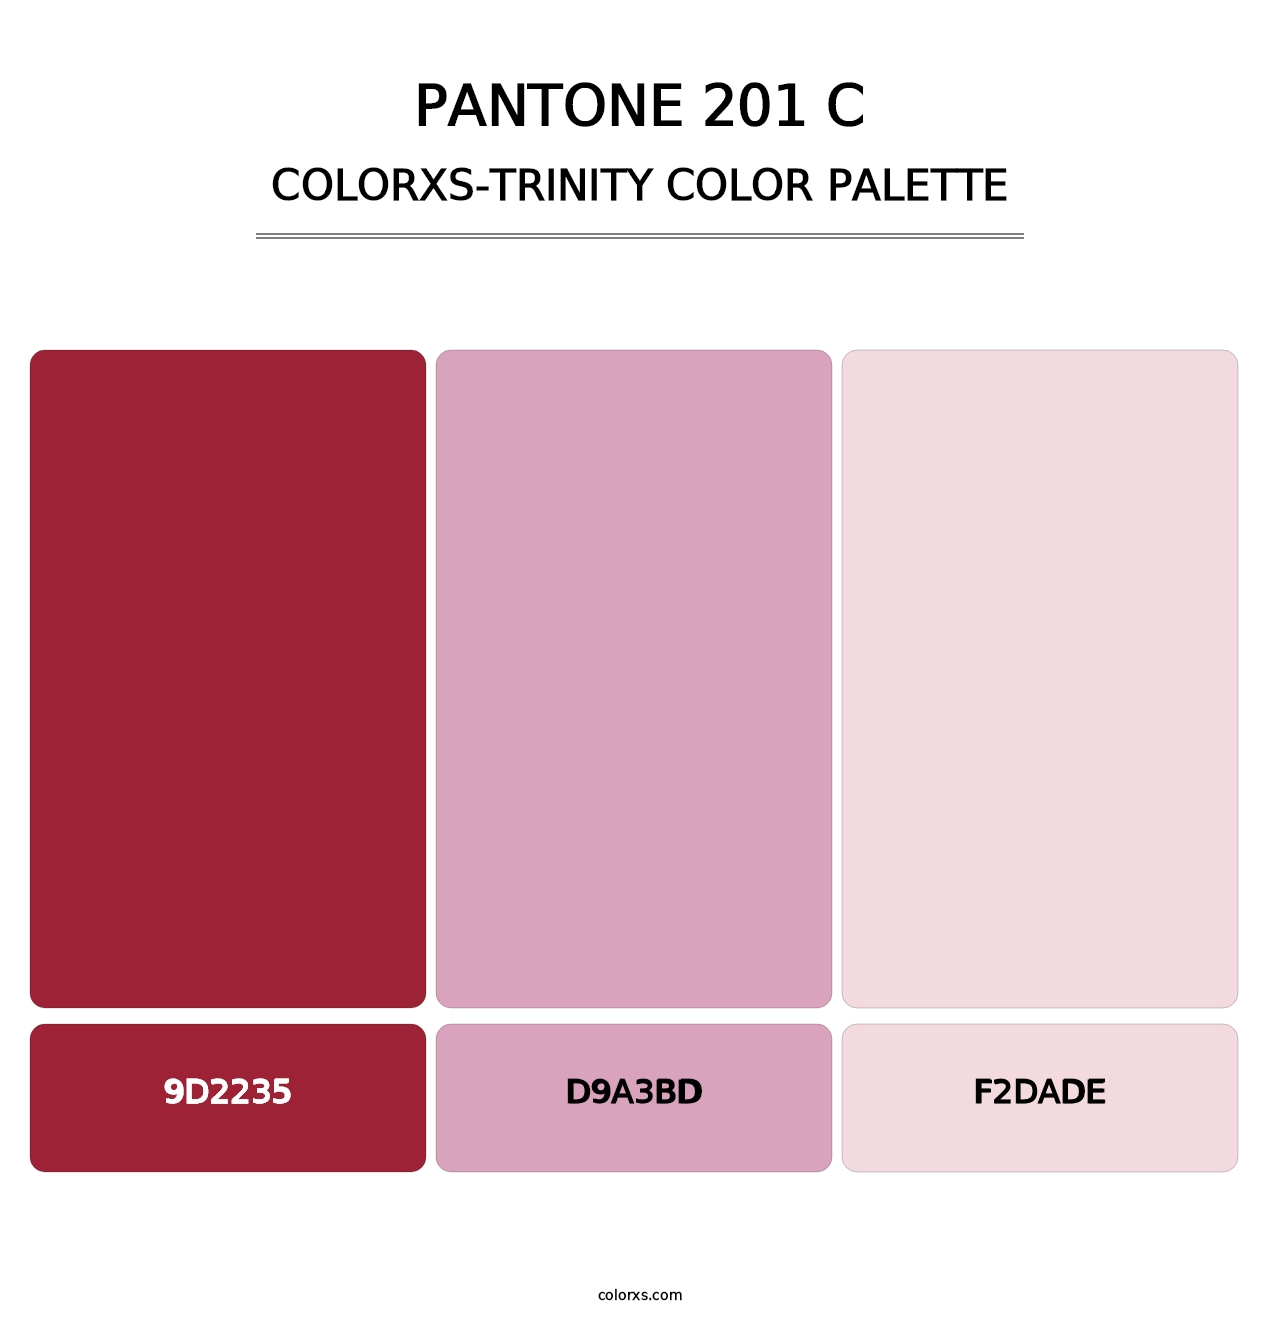 PANTONE 201 C - Colorxs Trinity Palette